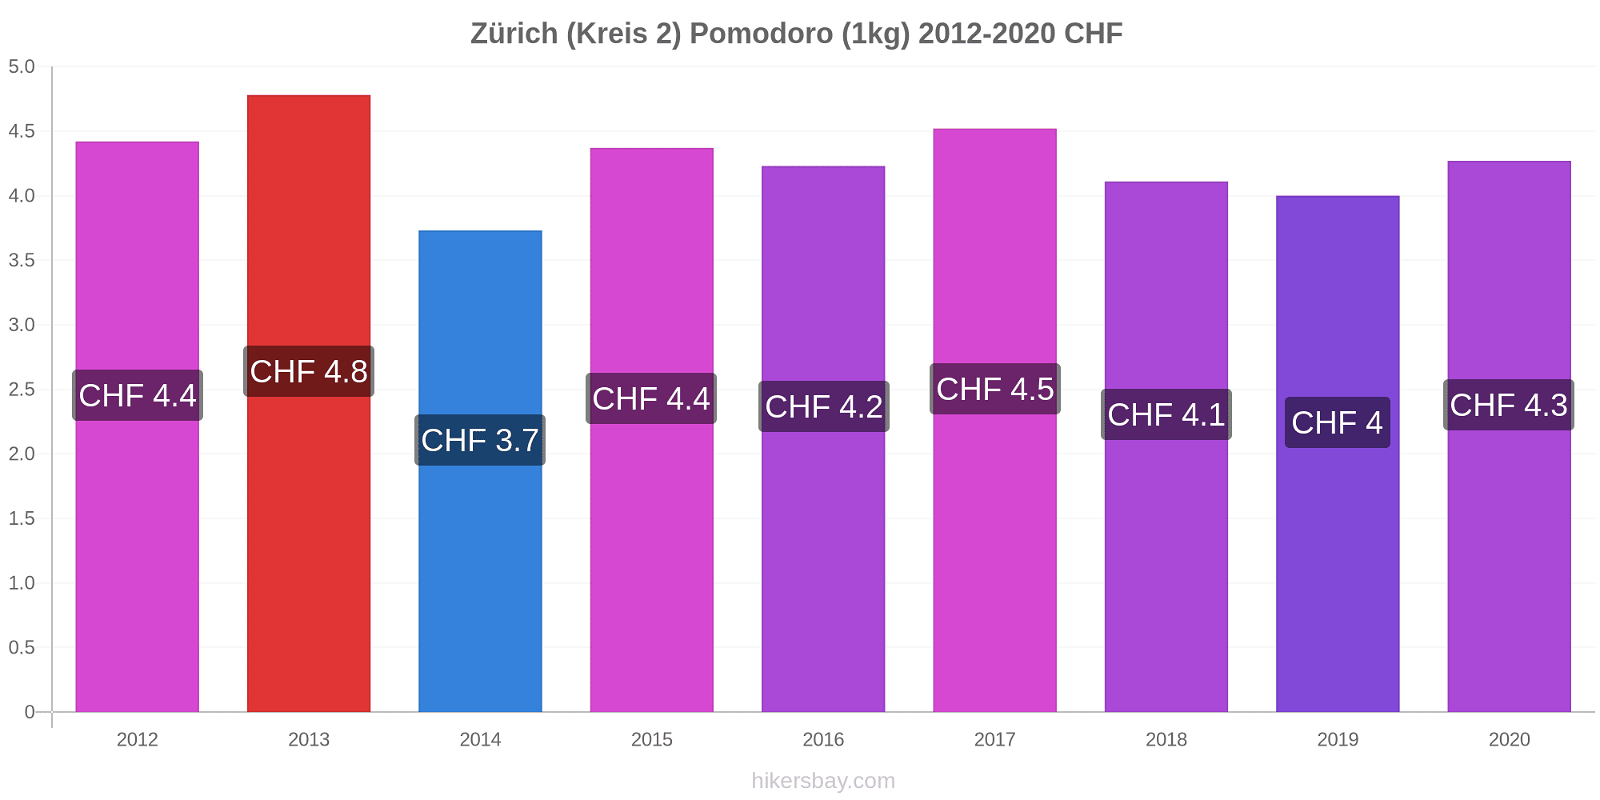 Zürich (Kreis 2) variazioni di prezzo Pomodoro (1kg) hikersbay.com